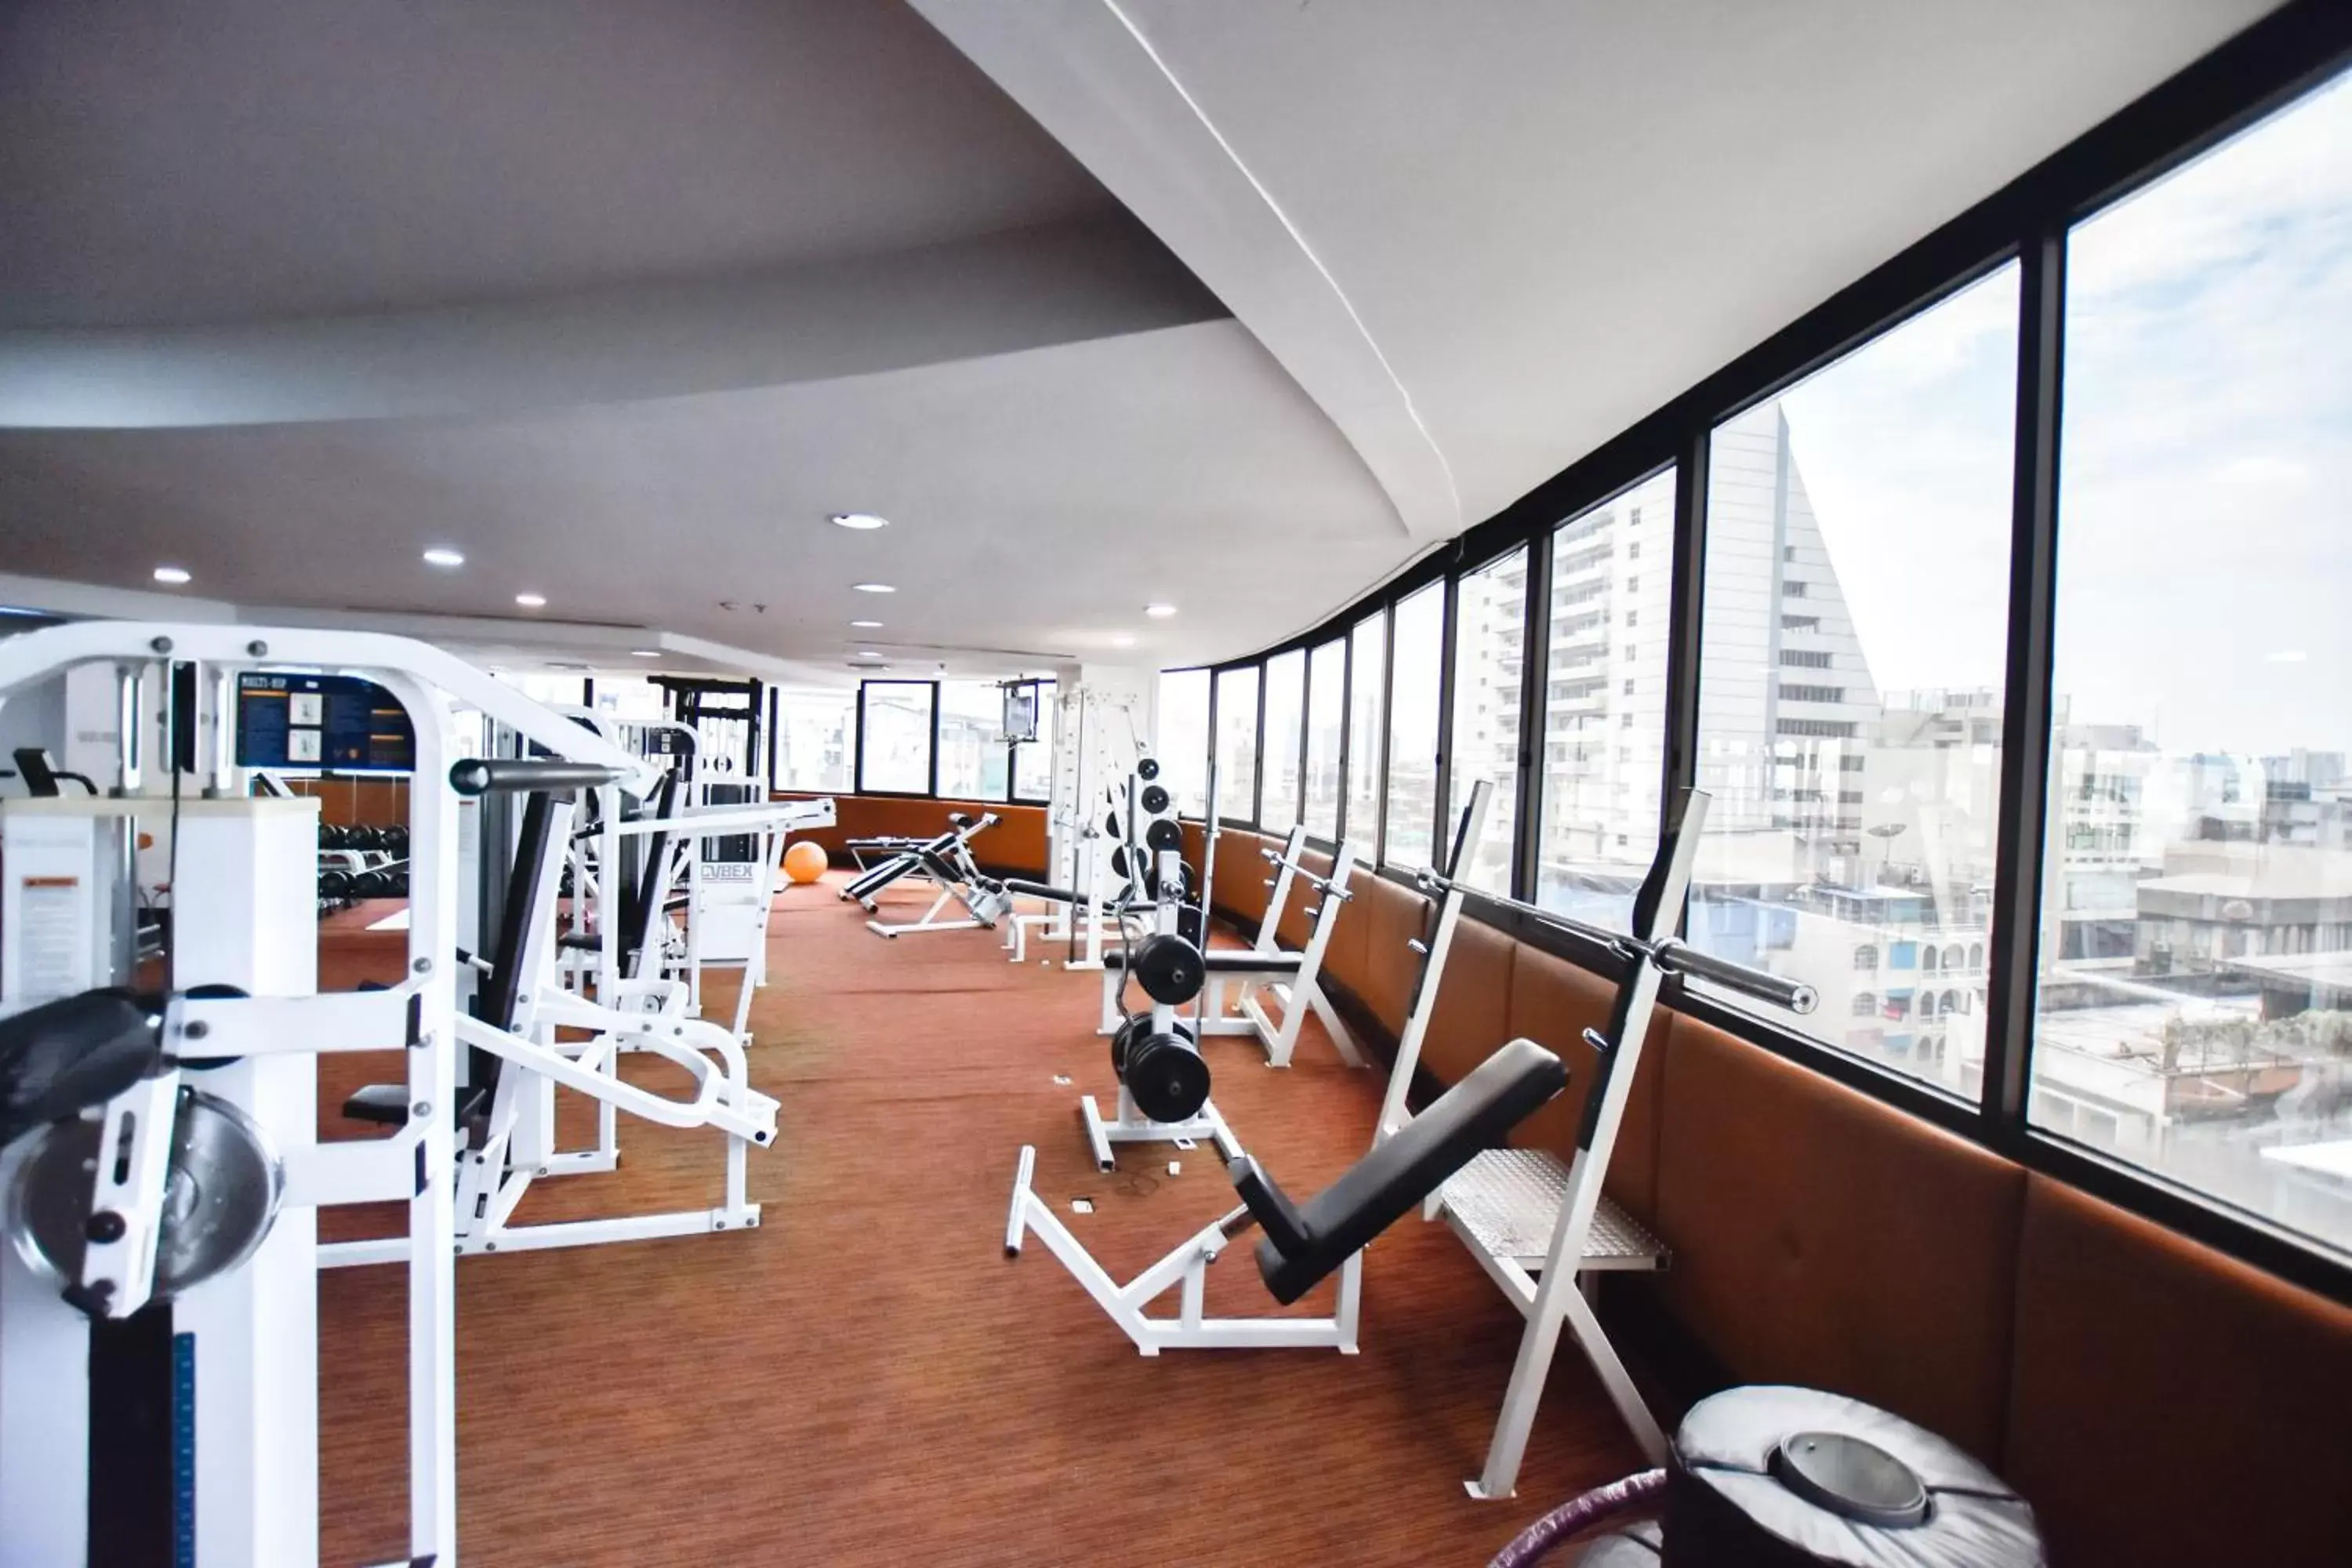 Fitness centre/facilities, Fitness Center/Facilities in Grand China Bangkok